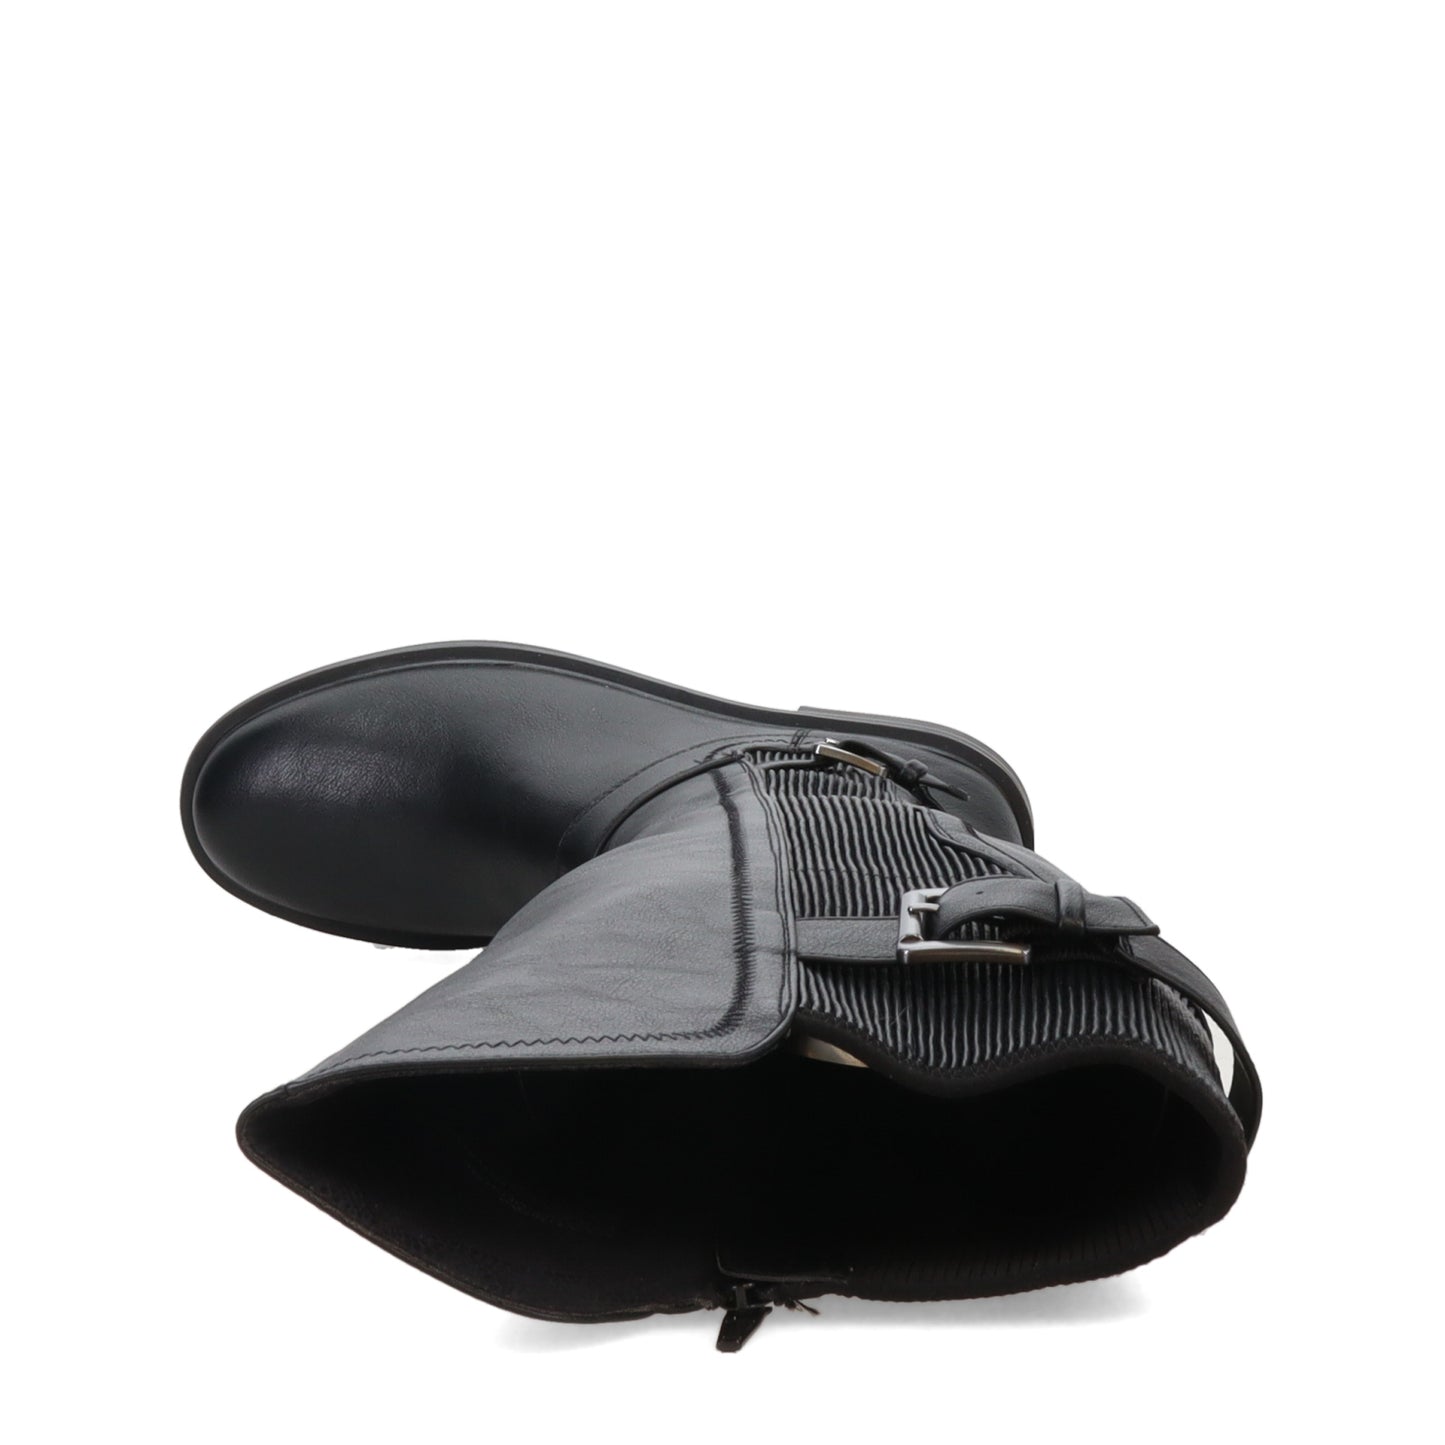 Peltz Shoes  Women's White Mountain Meditate Boot - Wide Calf BLACK W31662WC-001